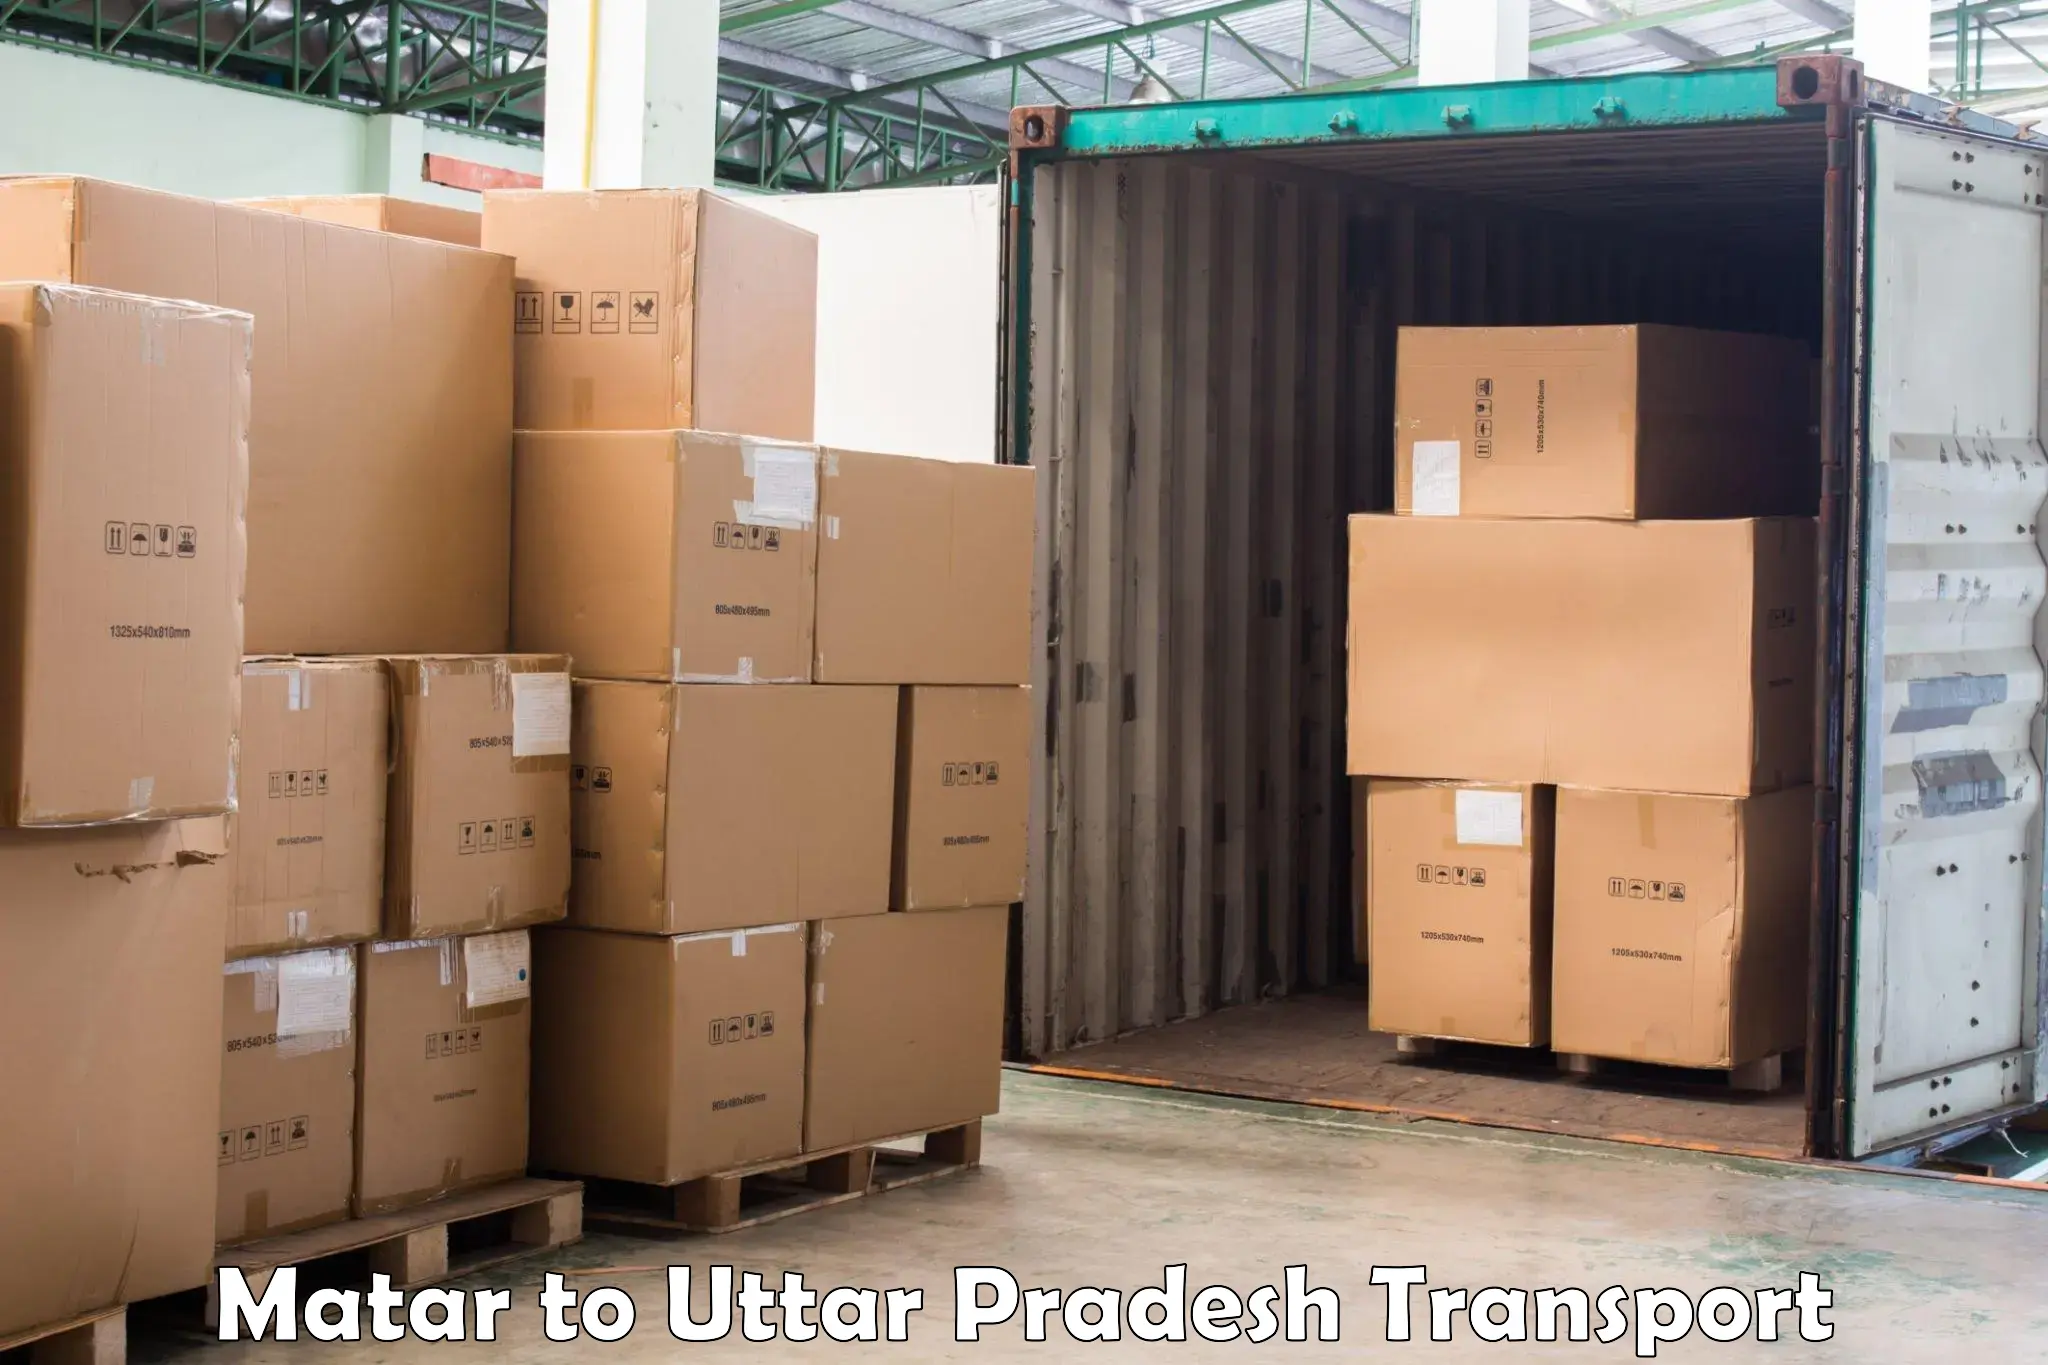 Truck transport companies in India Matar to Uttar Pradesh